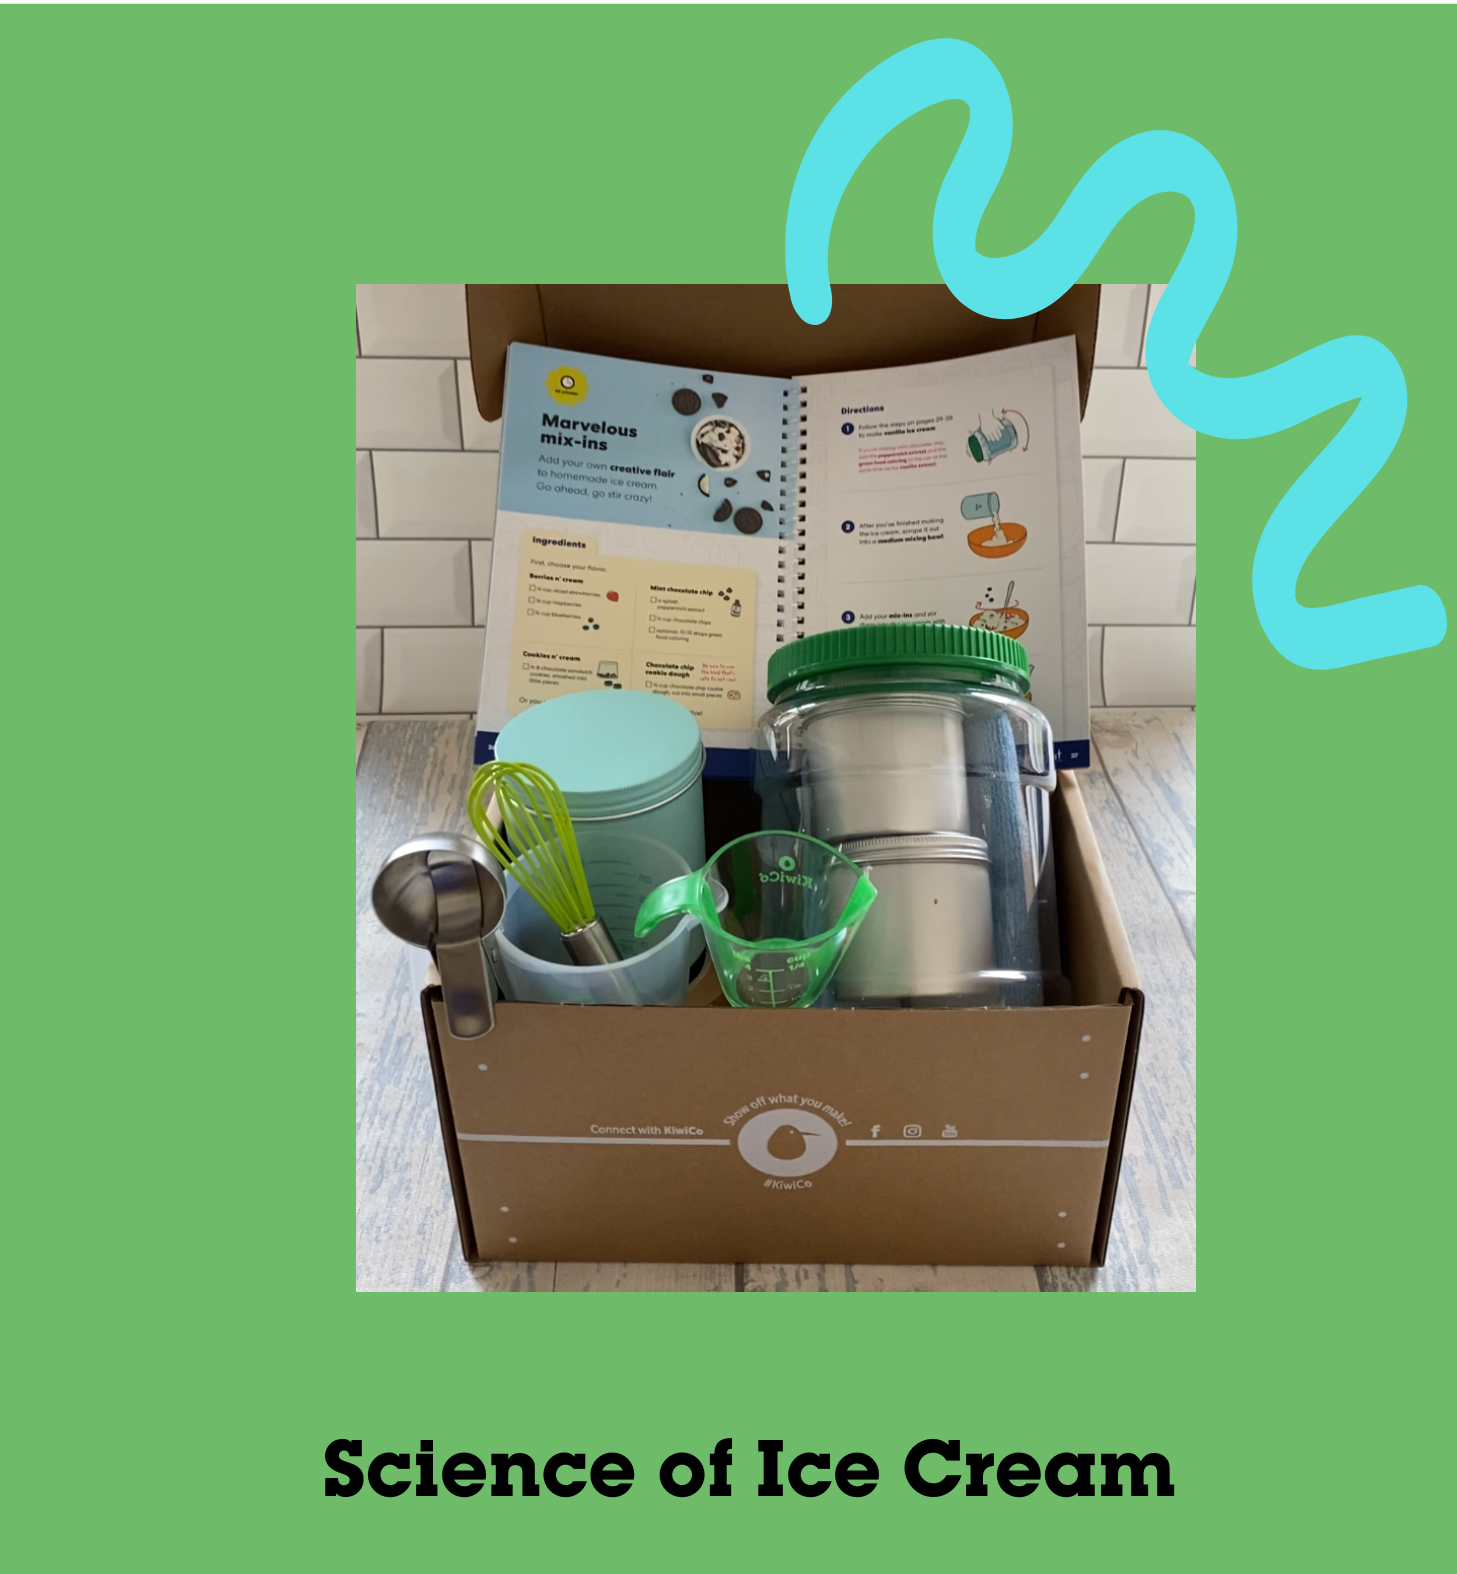 STEM Club - The Science of Ice Cream